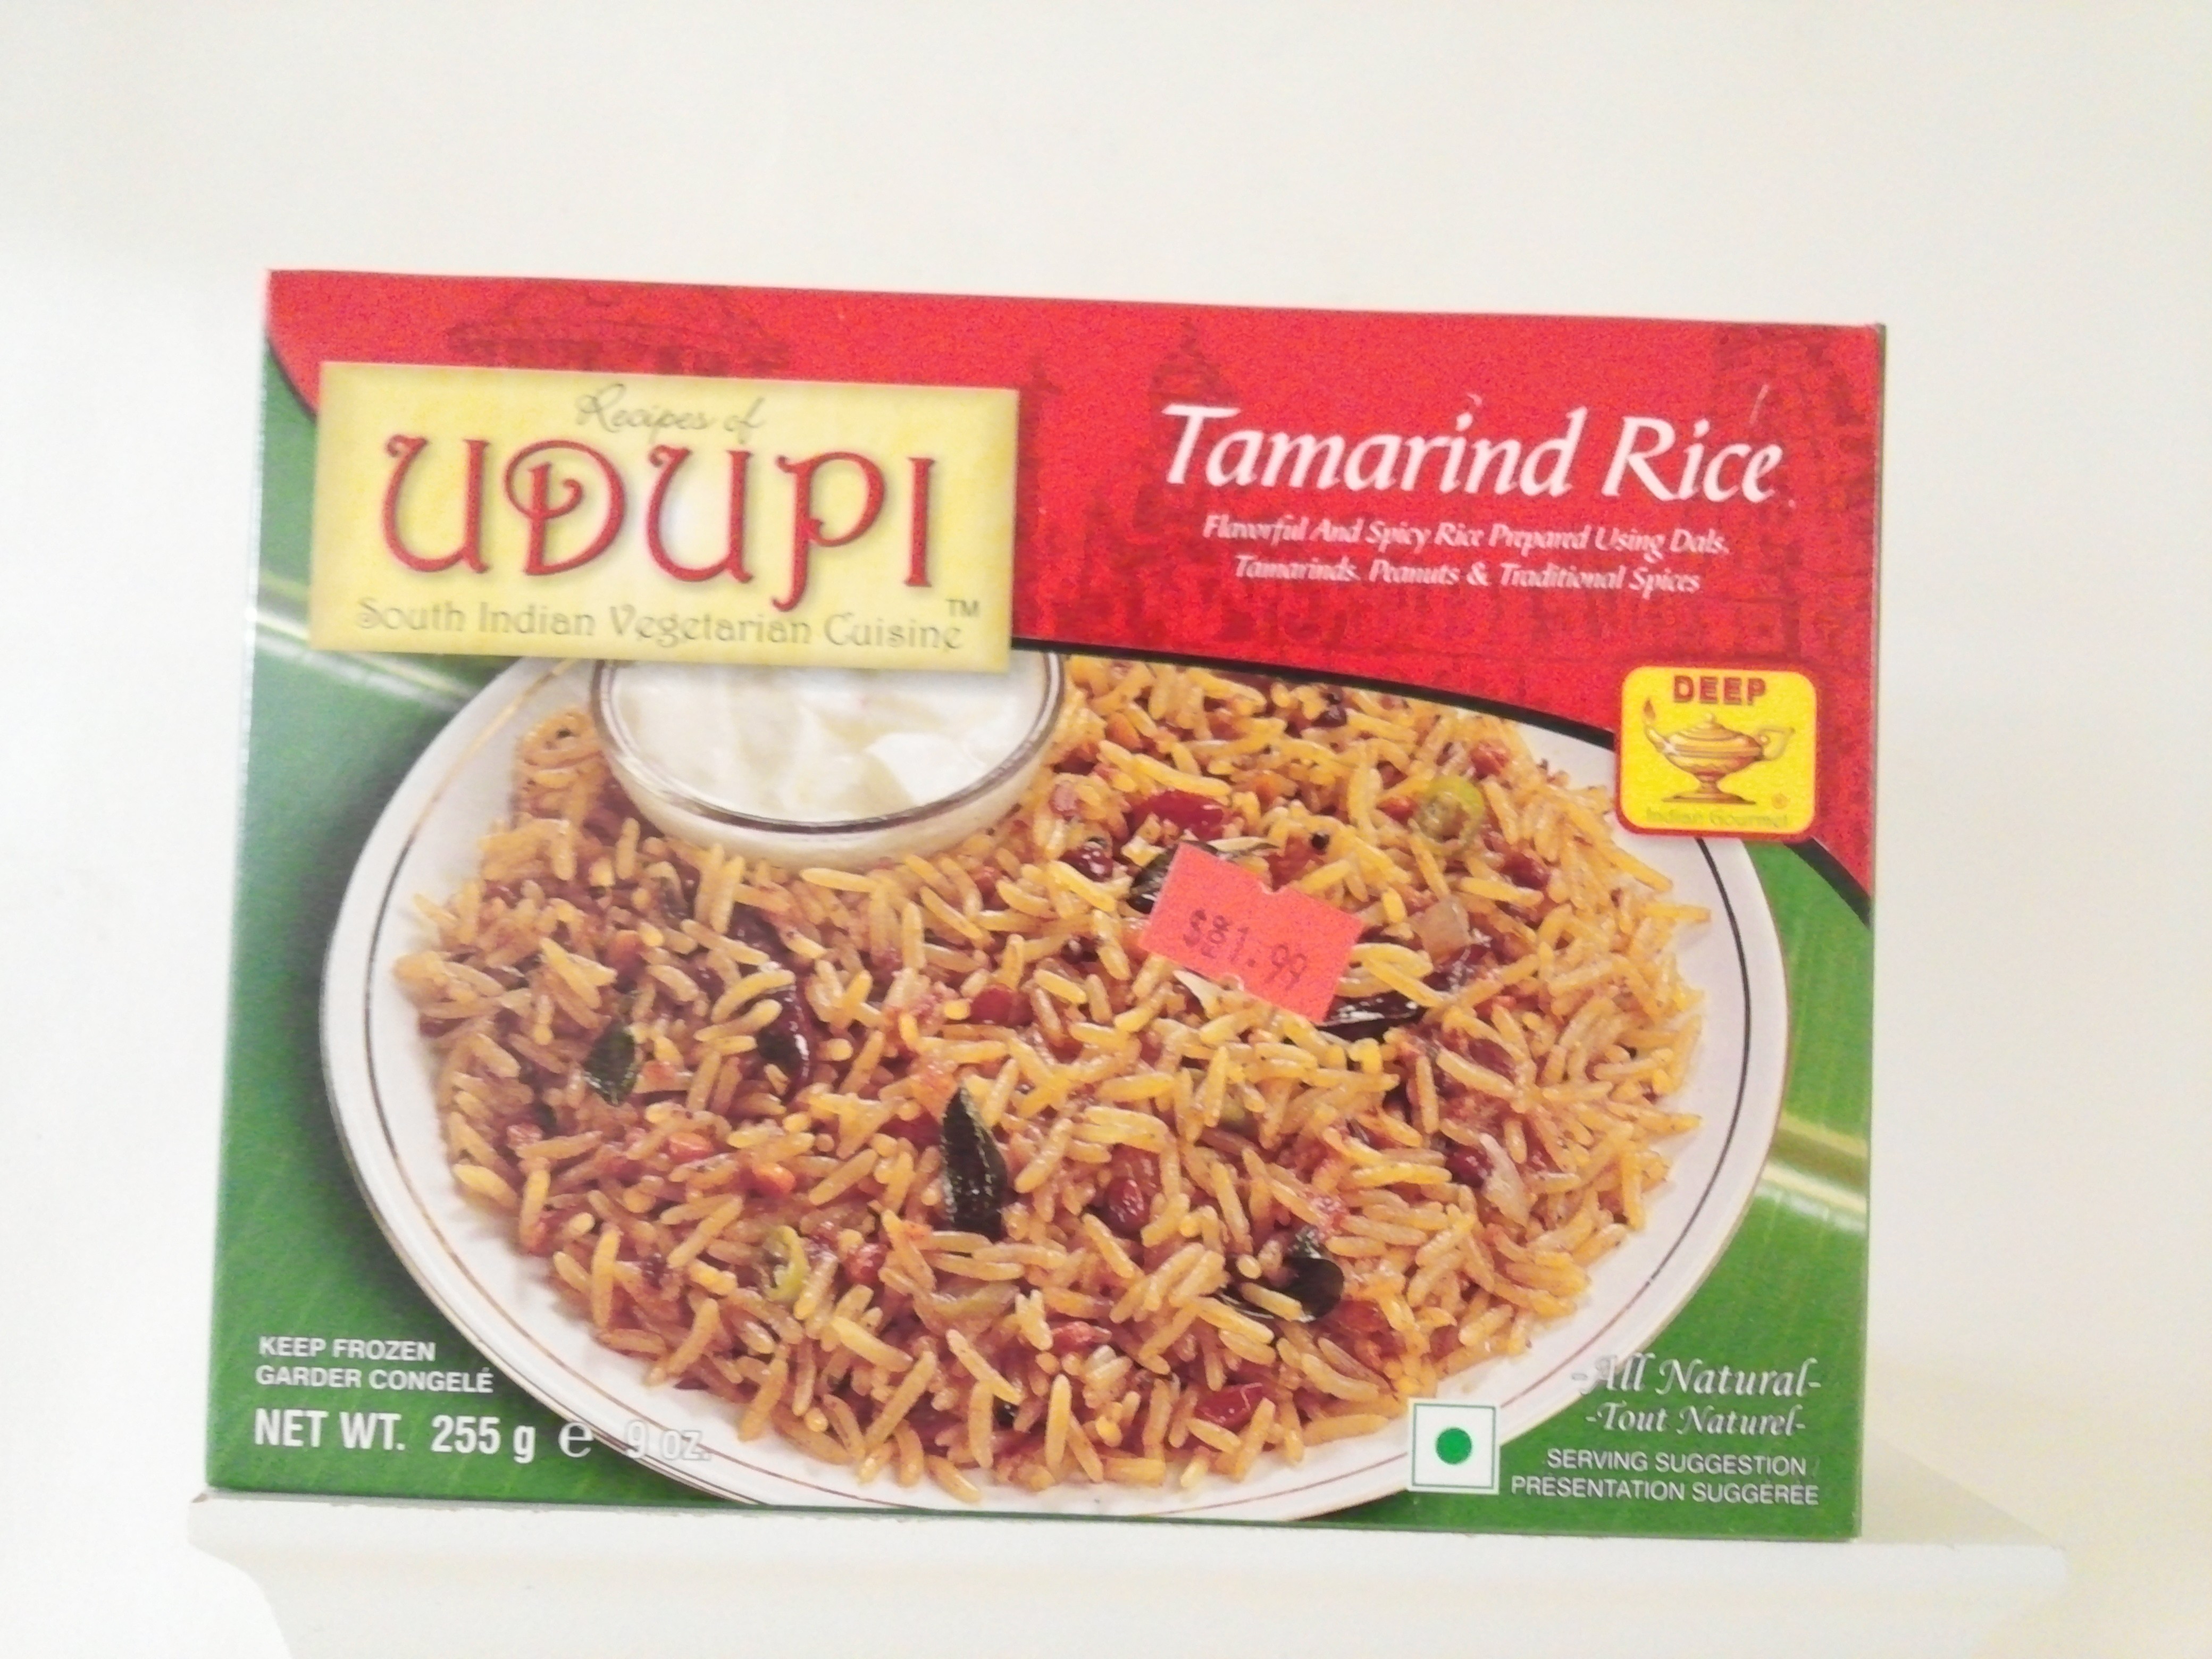 Udupi Tamarind Rice 9 oz